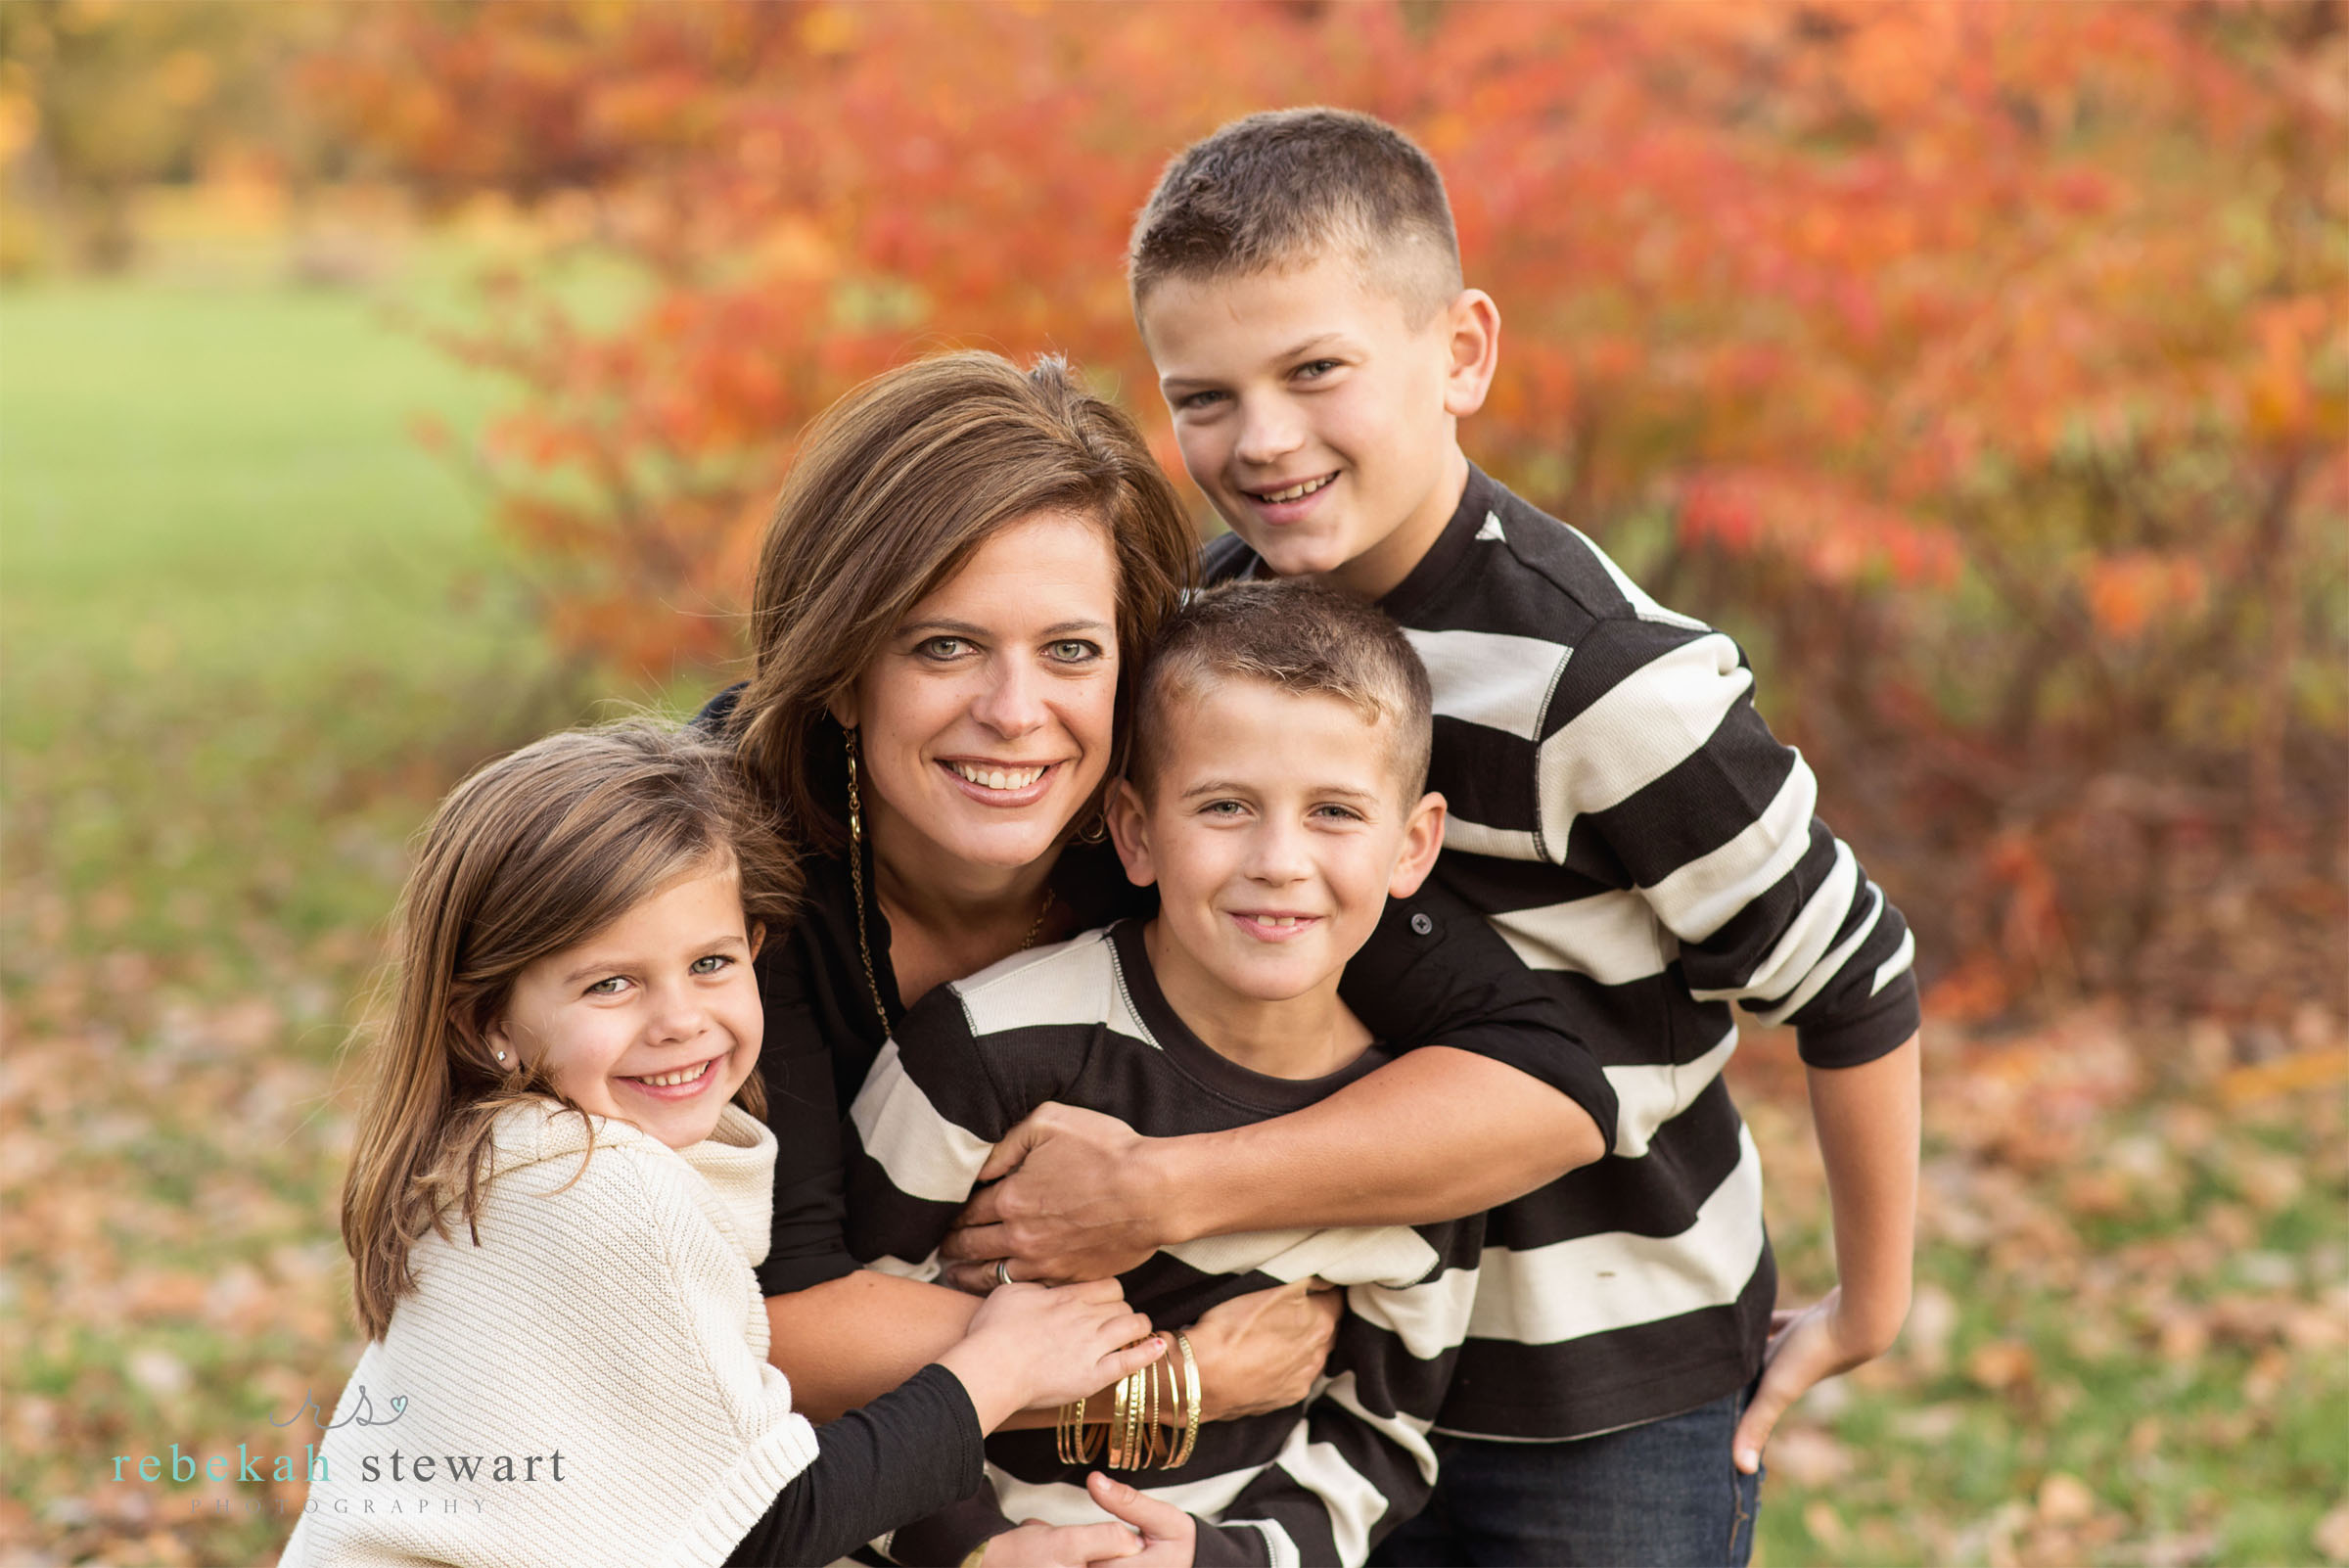 Beautiful family – football and fun {Cedar Rapids child photography}